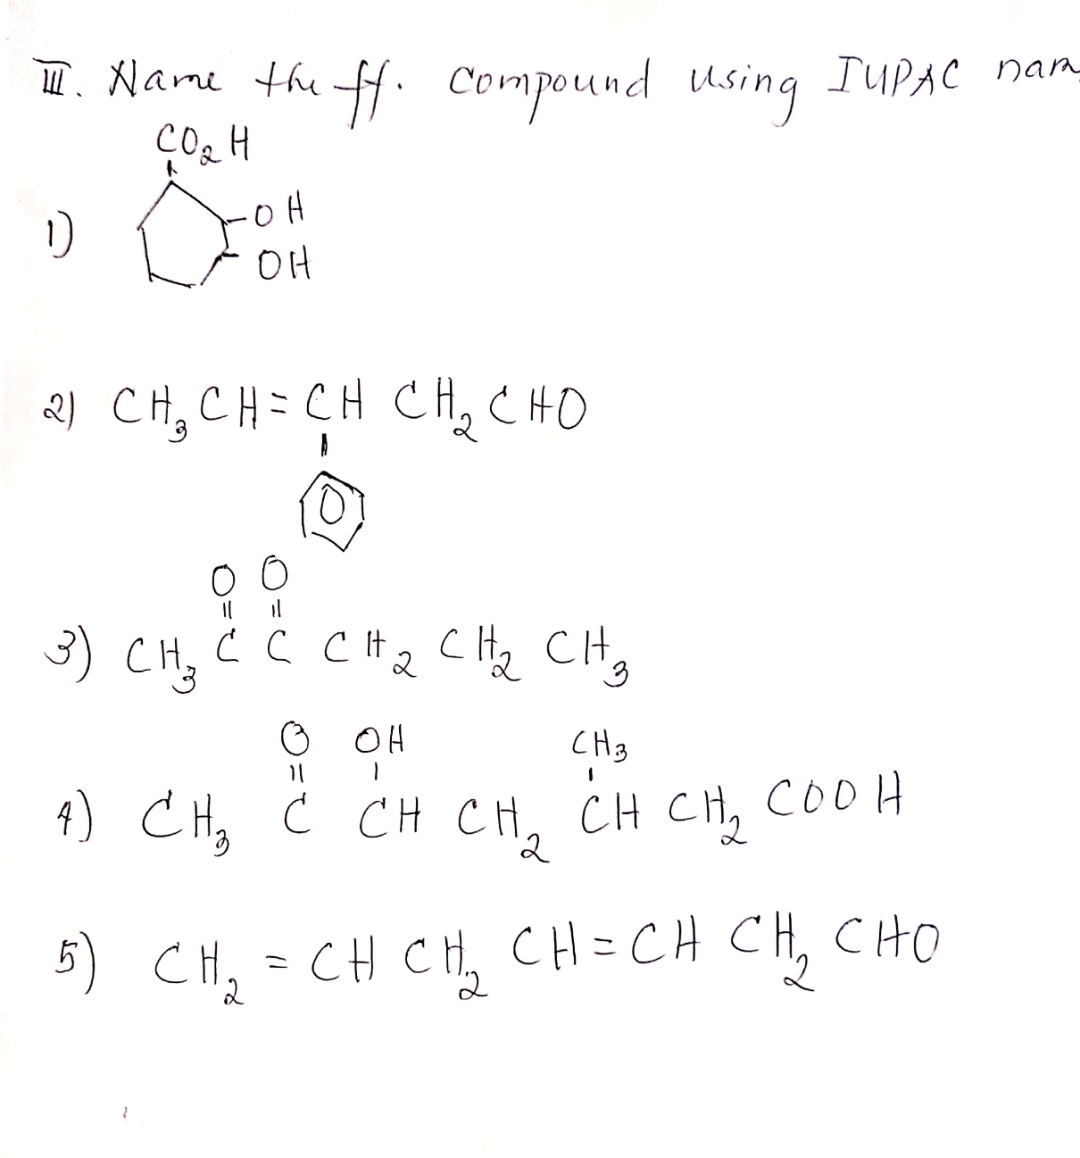 I. Name thu H. Compound Using IUPAC nam
1)
OH
2) CH, CH= CH CH, CHO
3) CHy
Ć C CH, CH, CH,
O OH
CH3
4) C Hz Ċ CH CH. CH CH, COOH
2
5) CH, = CH CH, CH=CH CH, CHO
